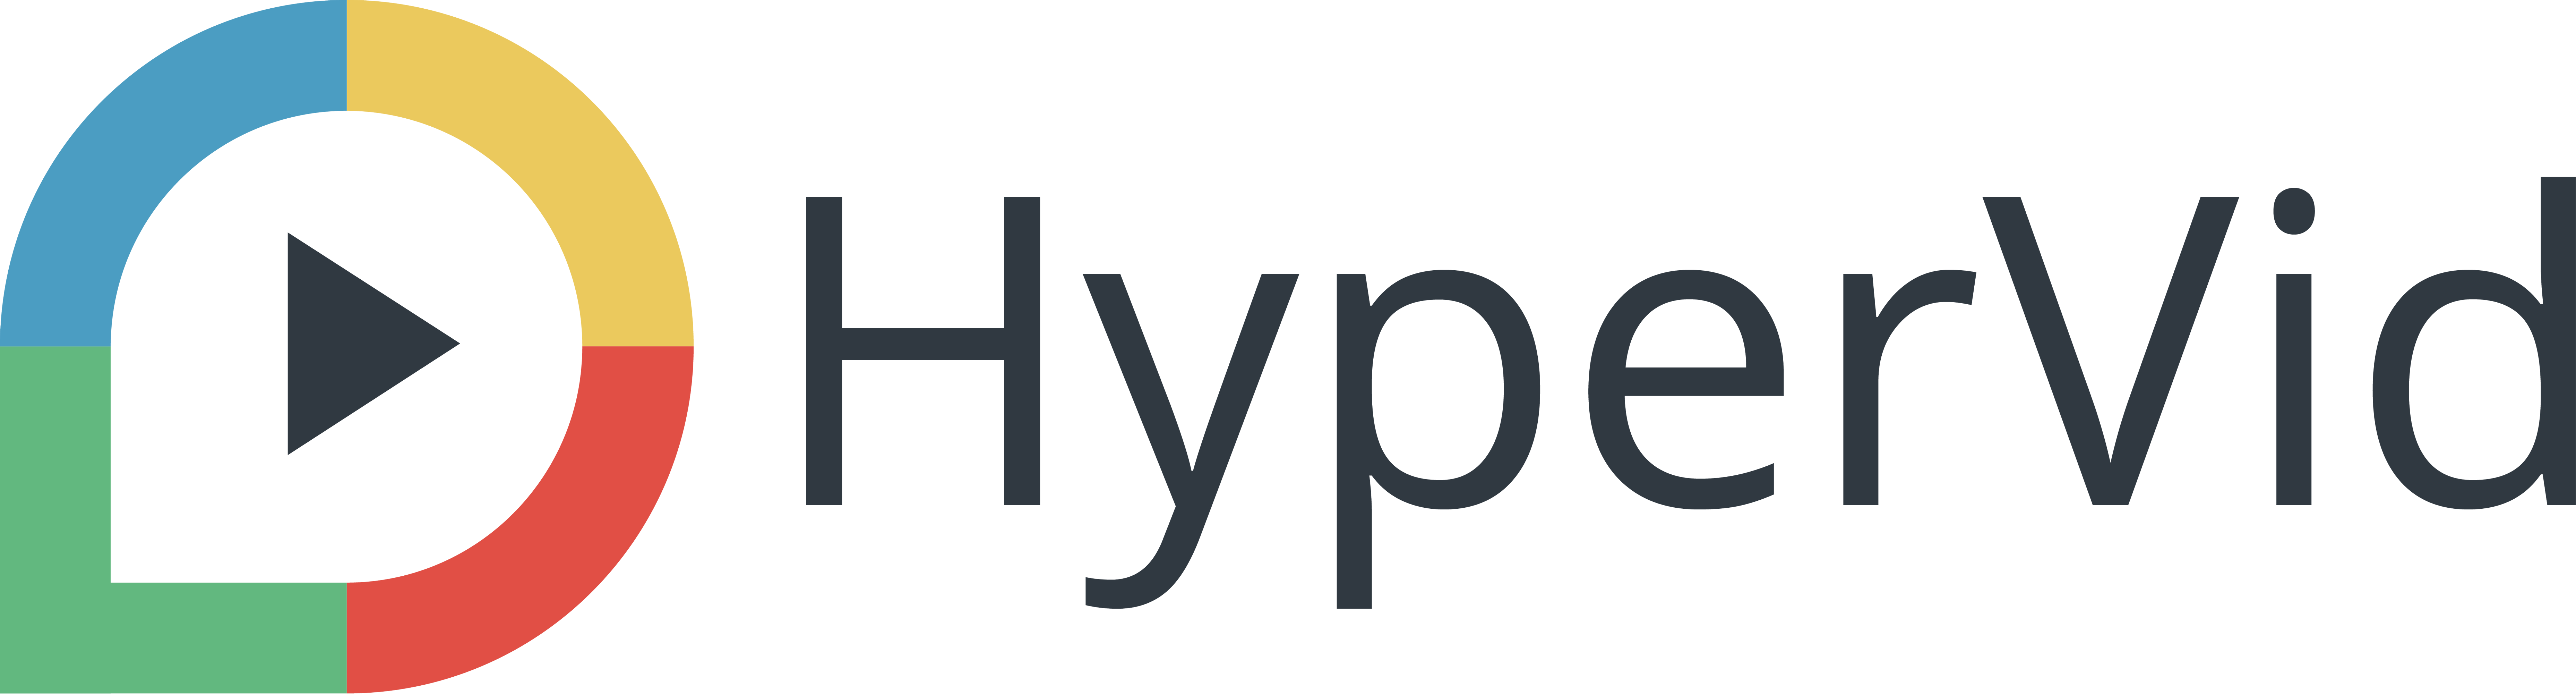 HyperVid Logo